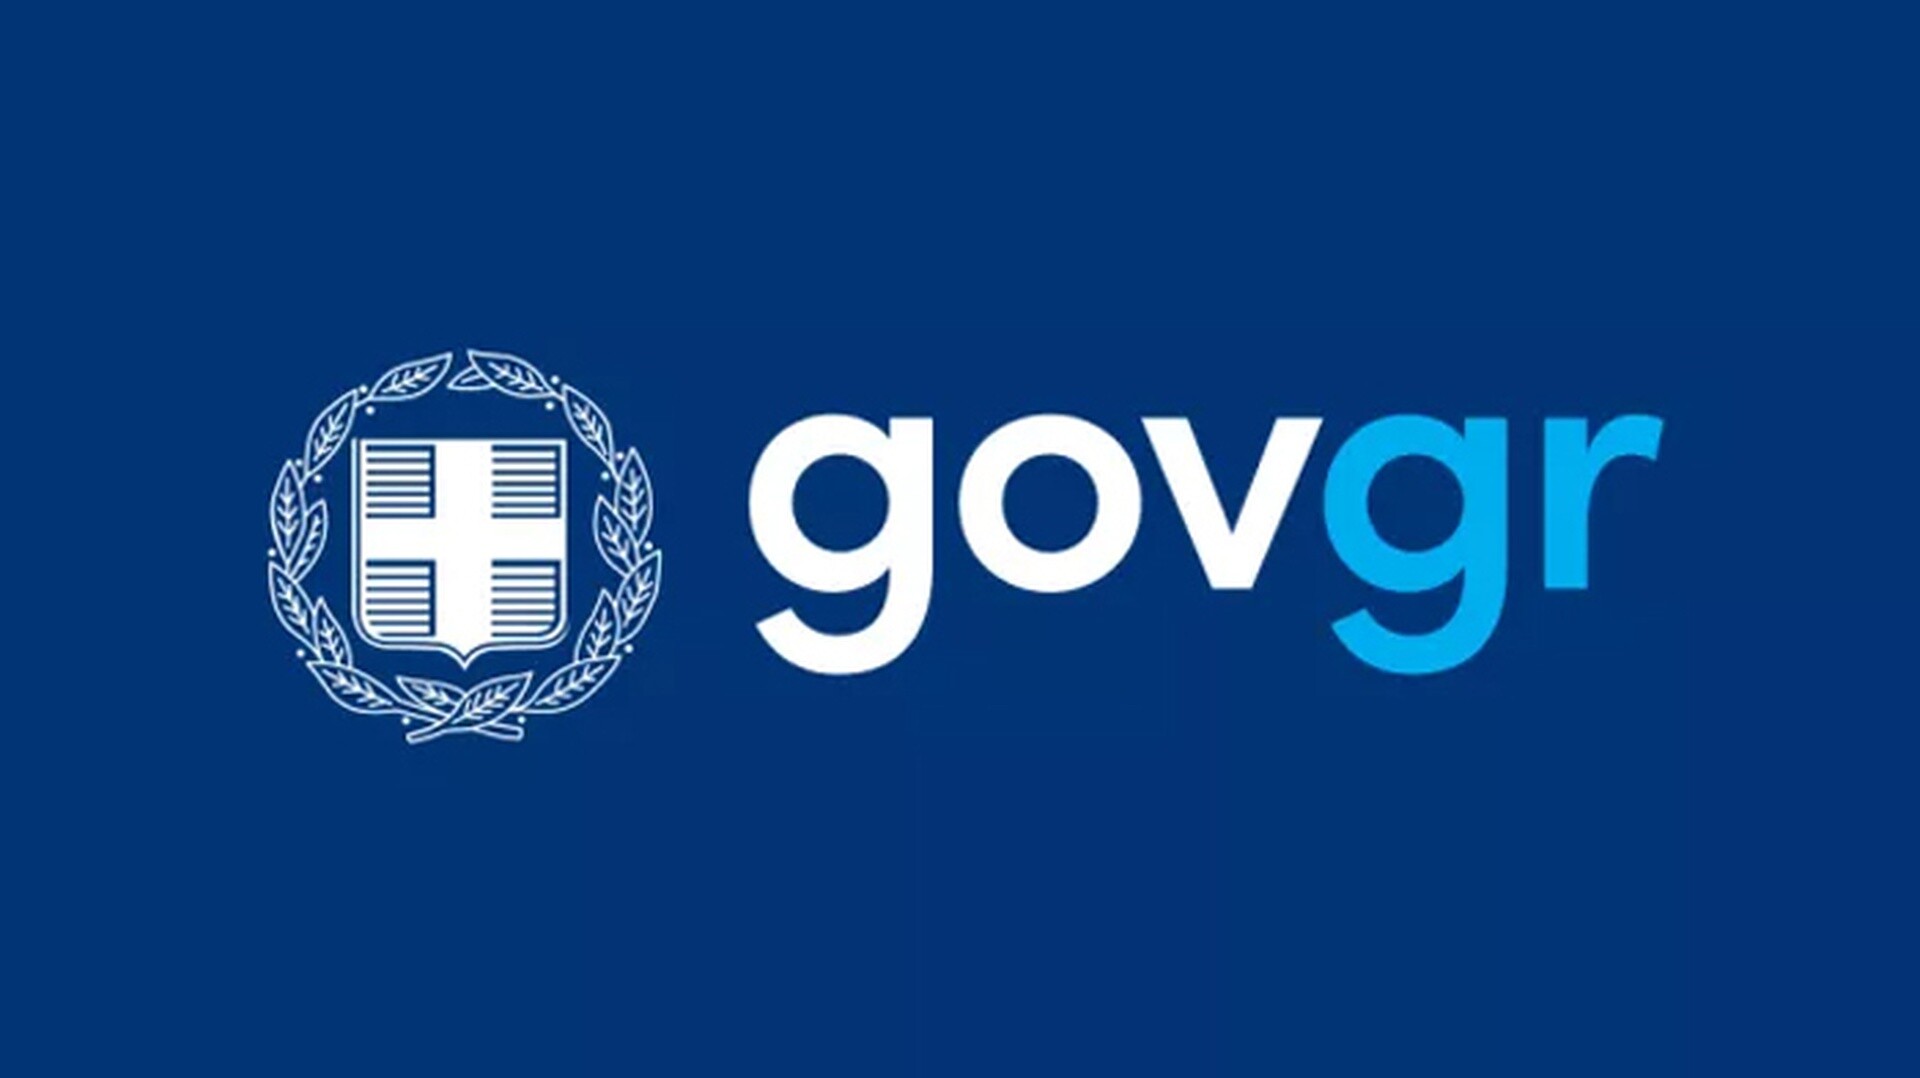 Gov.gr: Πέντε νέες υπηρεσίες που διευκολύνουν τους αγρότες